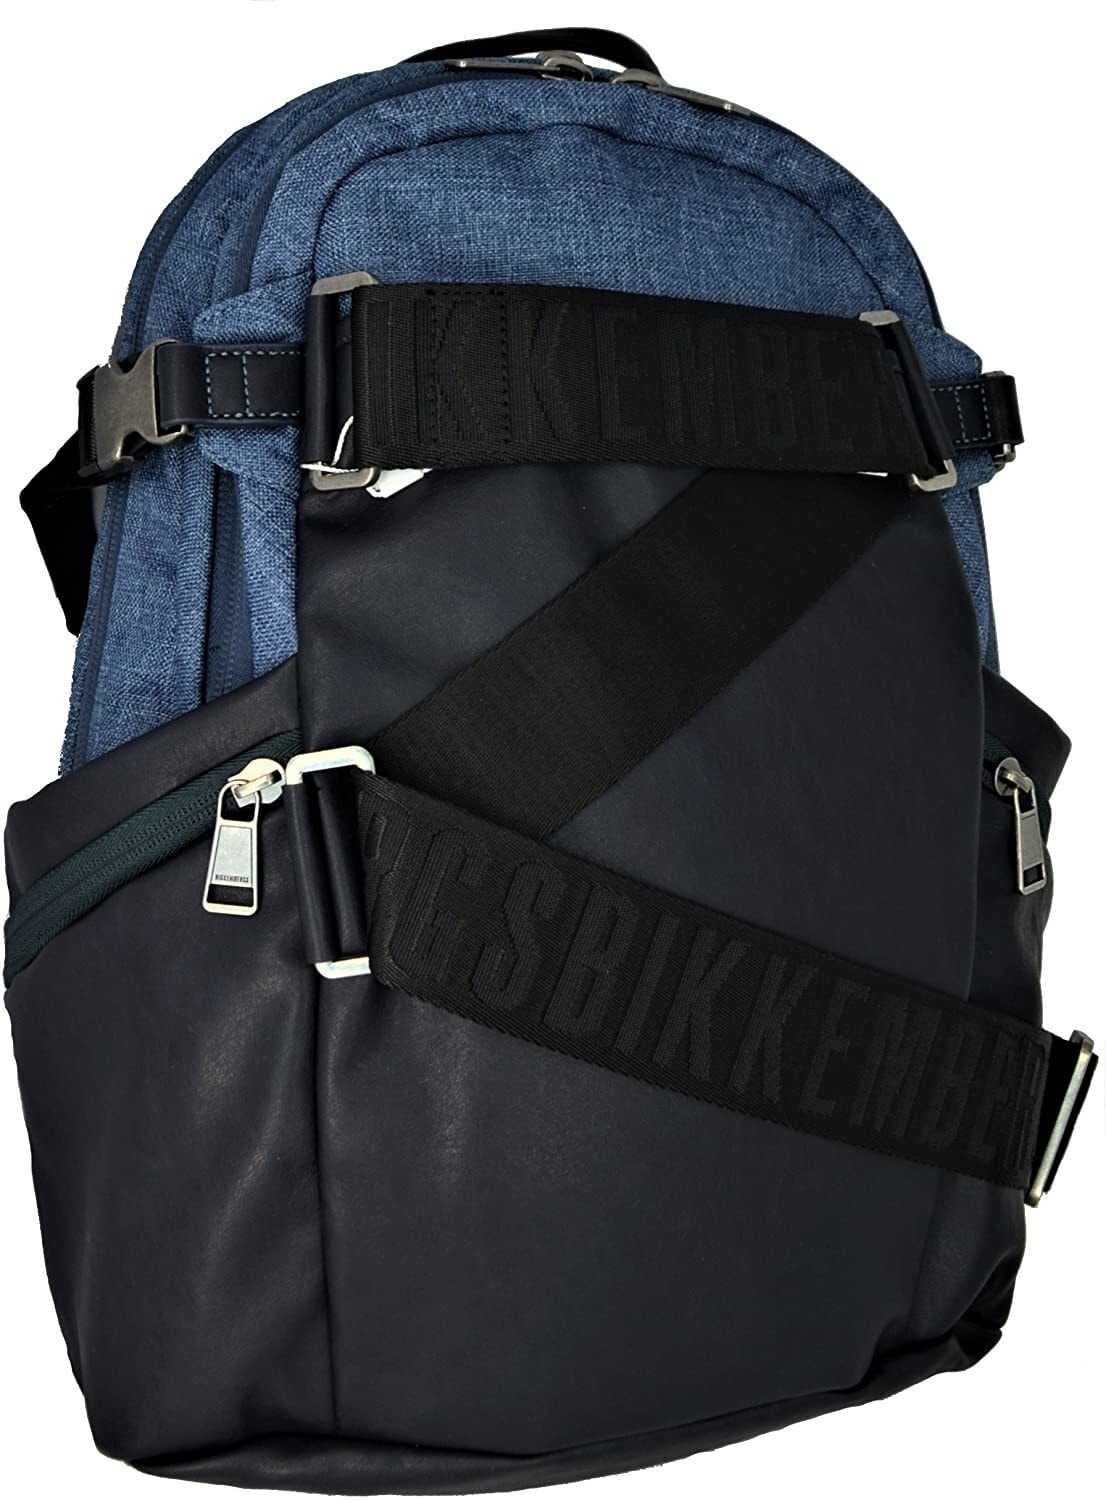 Мужской повседневный городской рюкзак черный синий BIKKEMBERGS Mens Db Strap Combo Backpack, 14.5 x 45 x 30 cm (W x H x L)